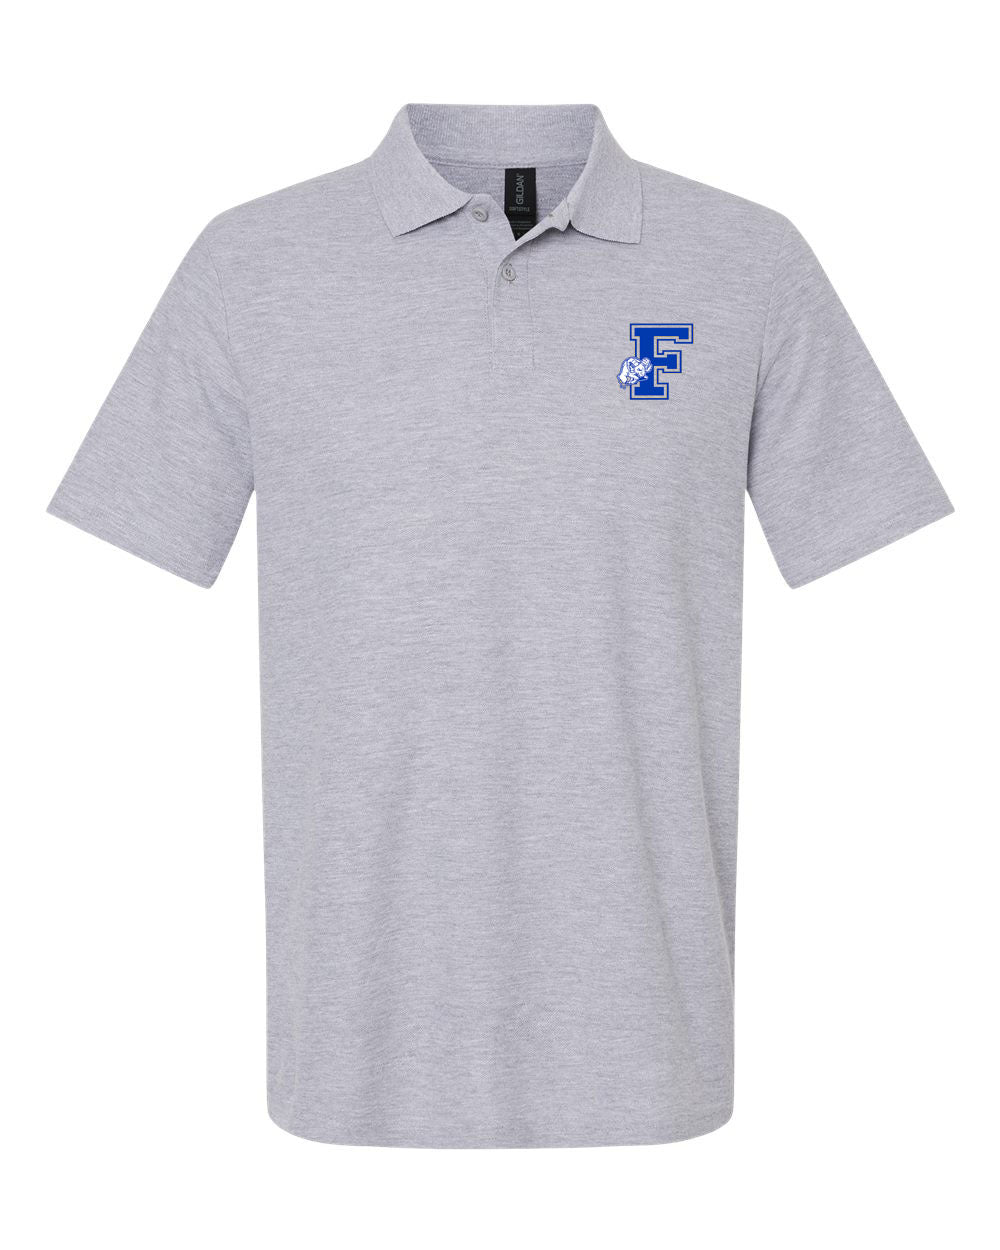 Franklin School Design 1 Polo T-Shirt